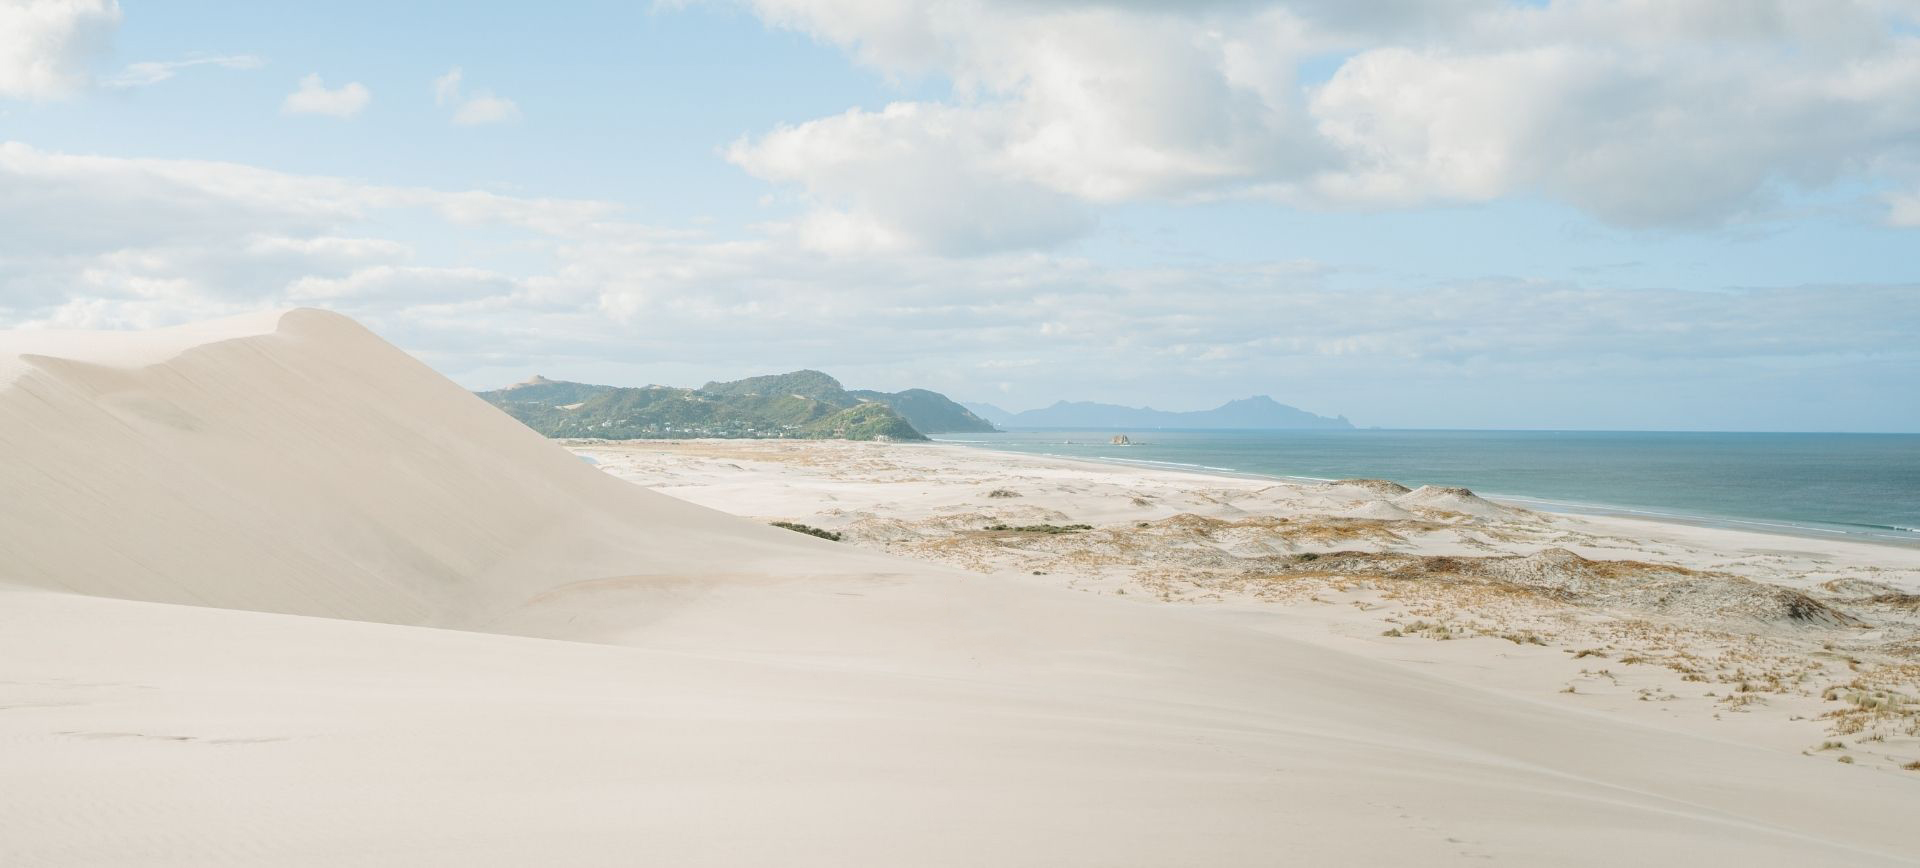 new zealand beach wedding location - sand dunes